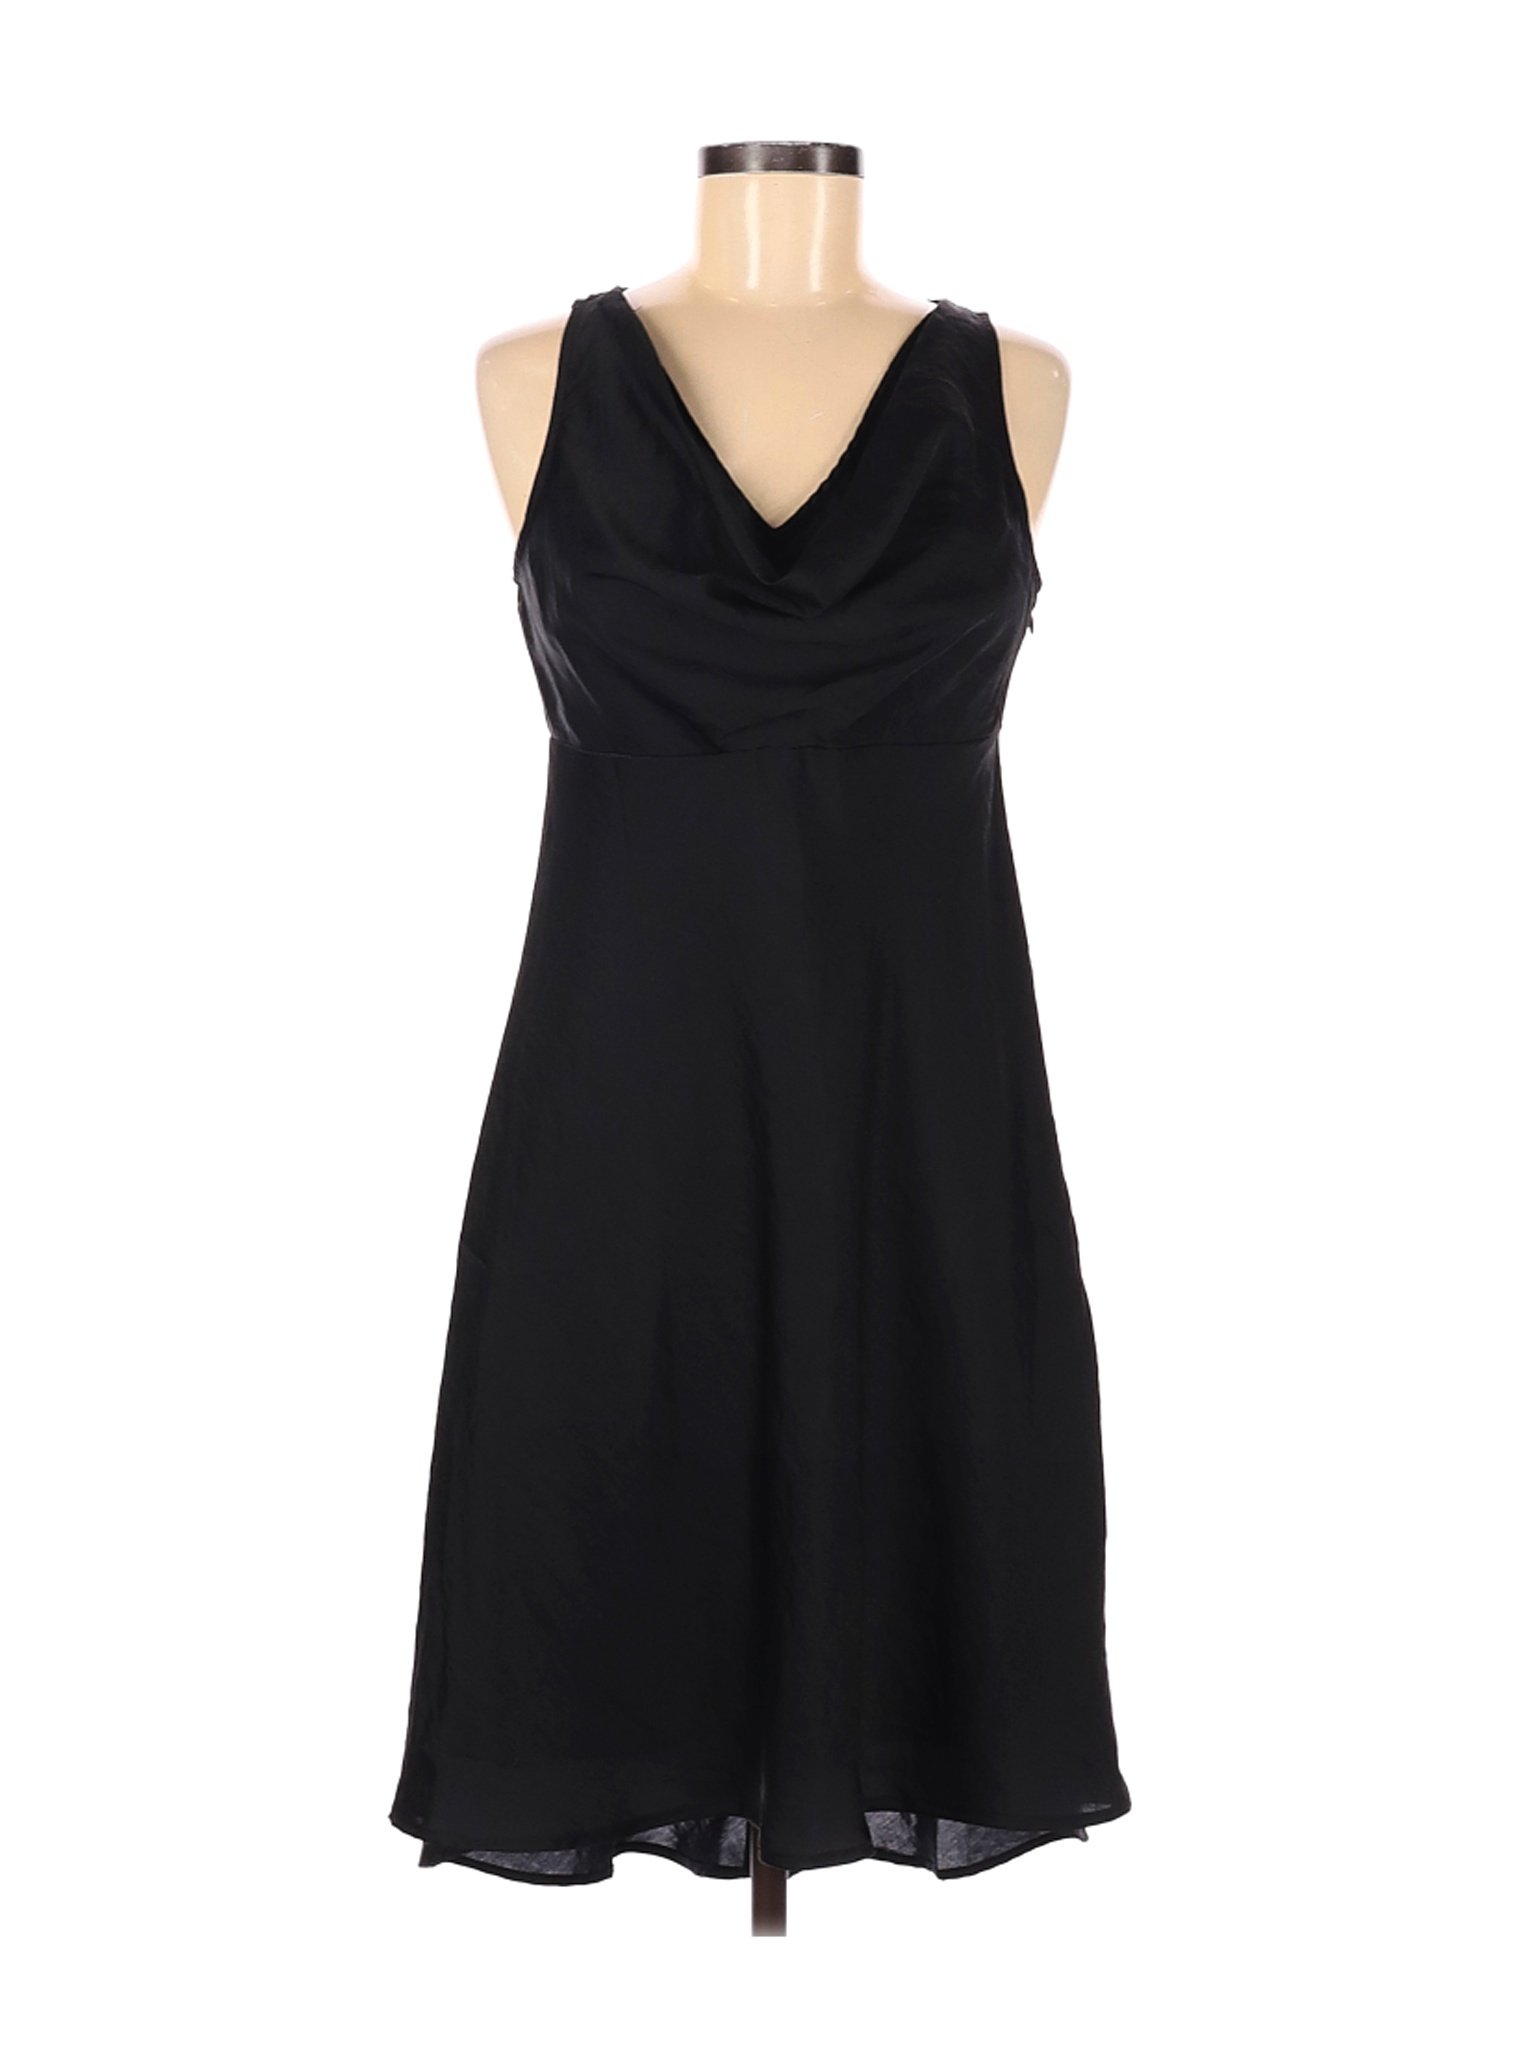 Old Navy Women Black Casual Dress 6 | eBay